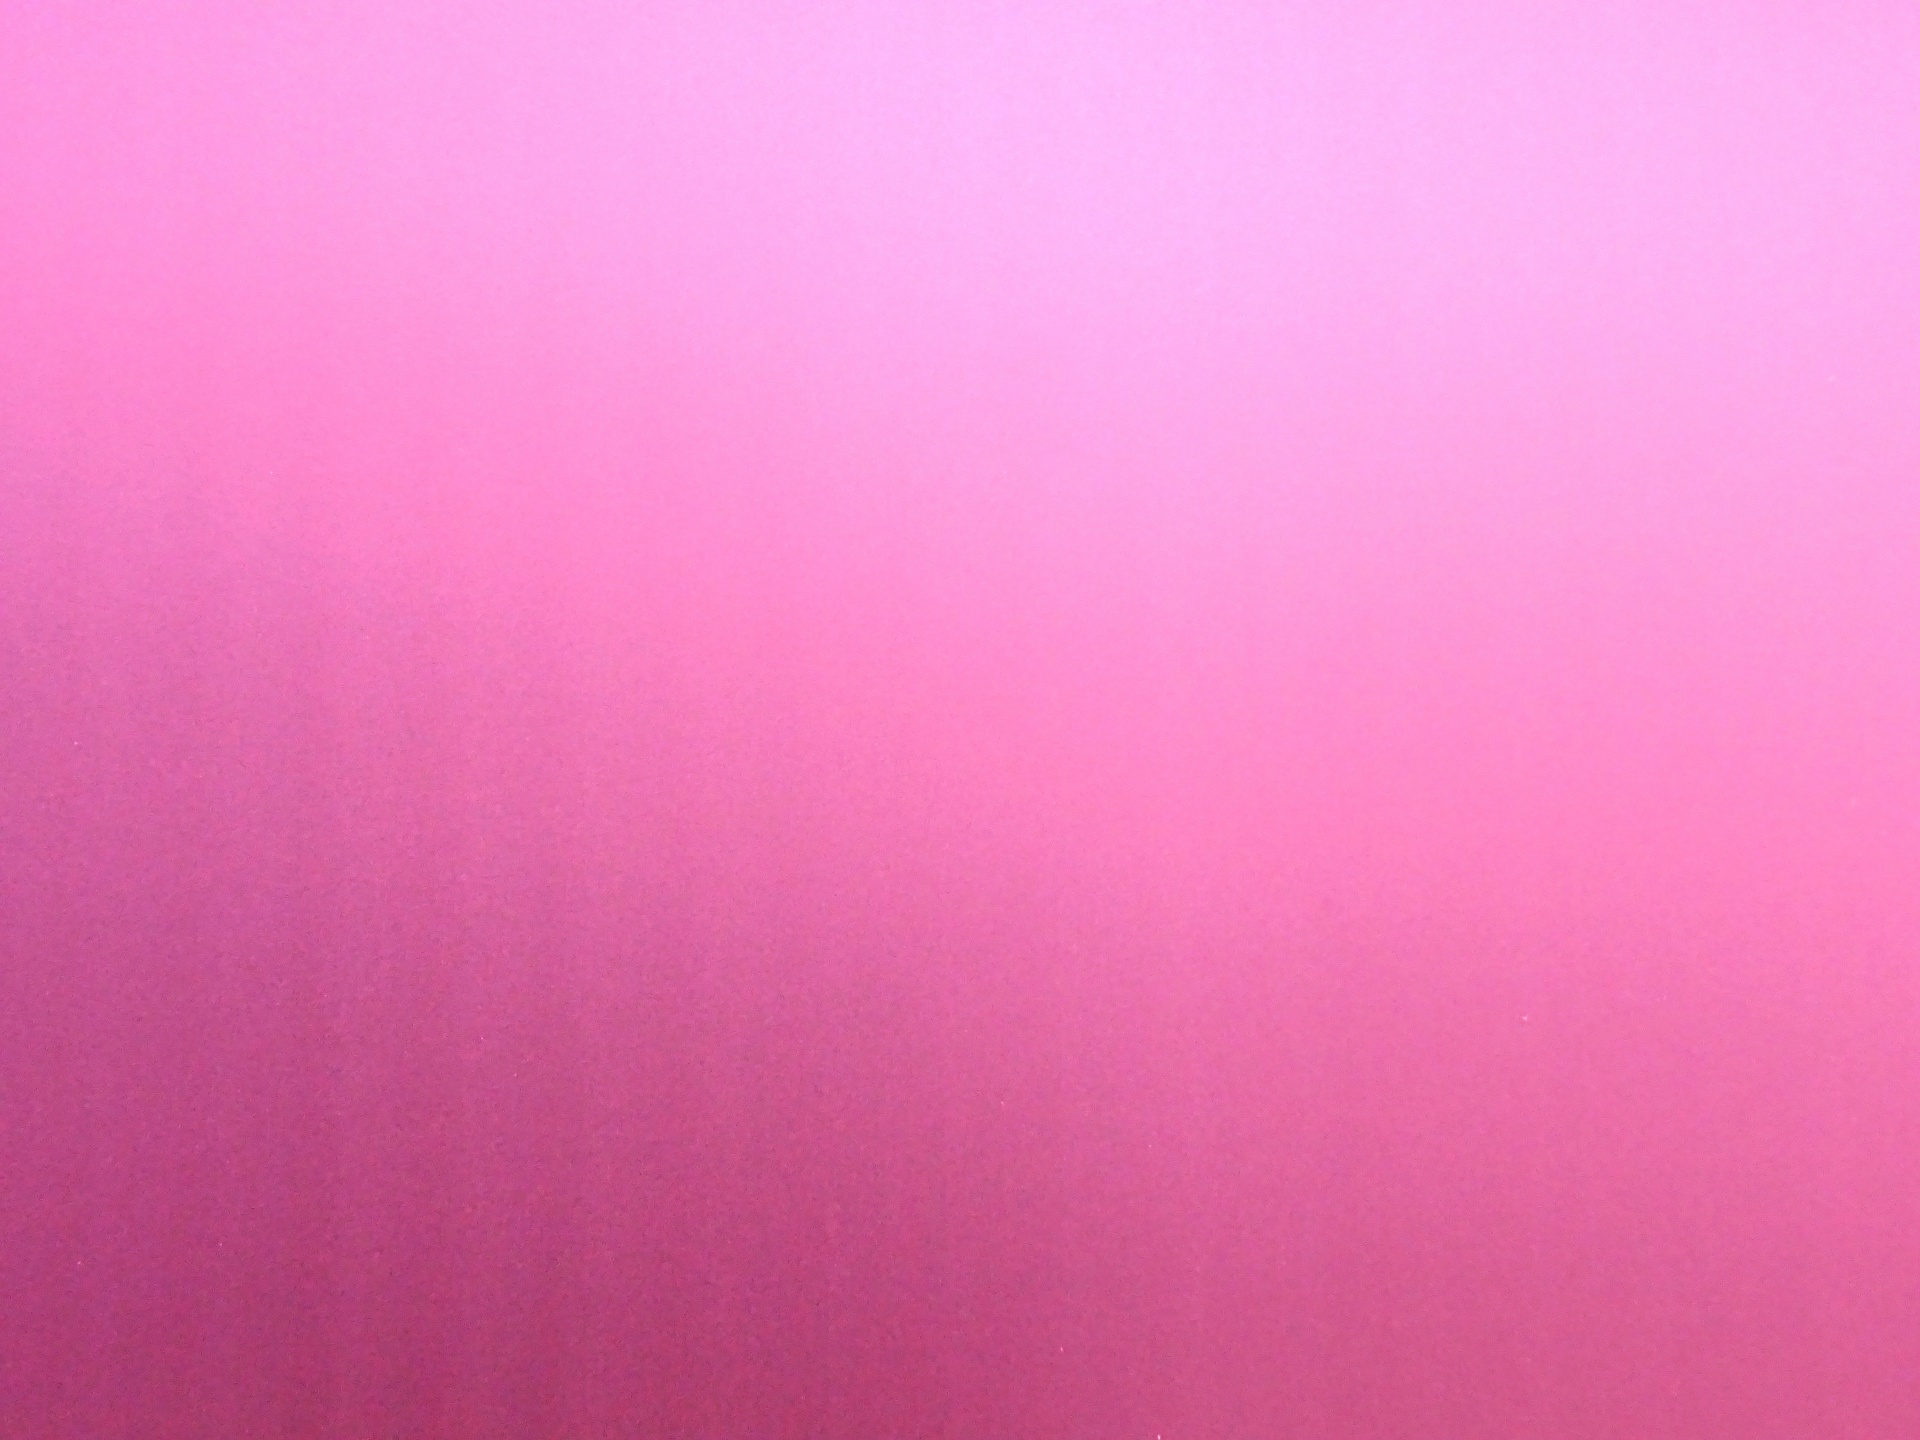 Pink Corner Fading Background